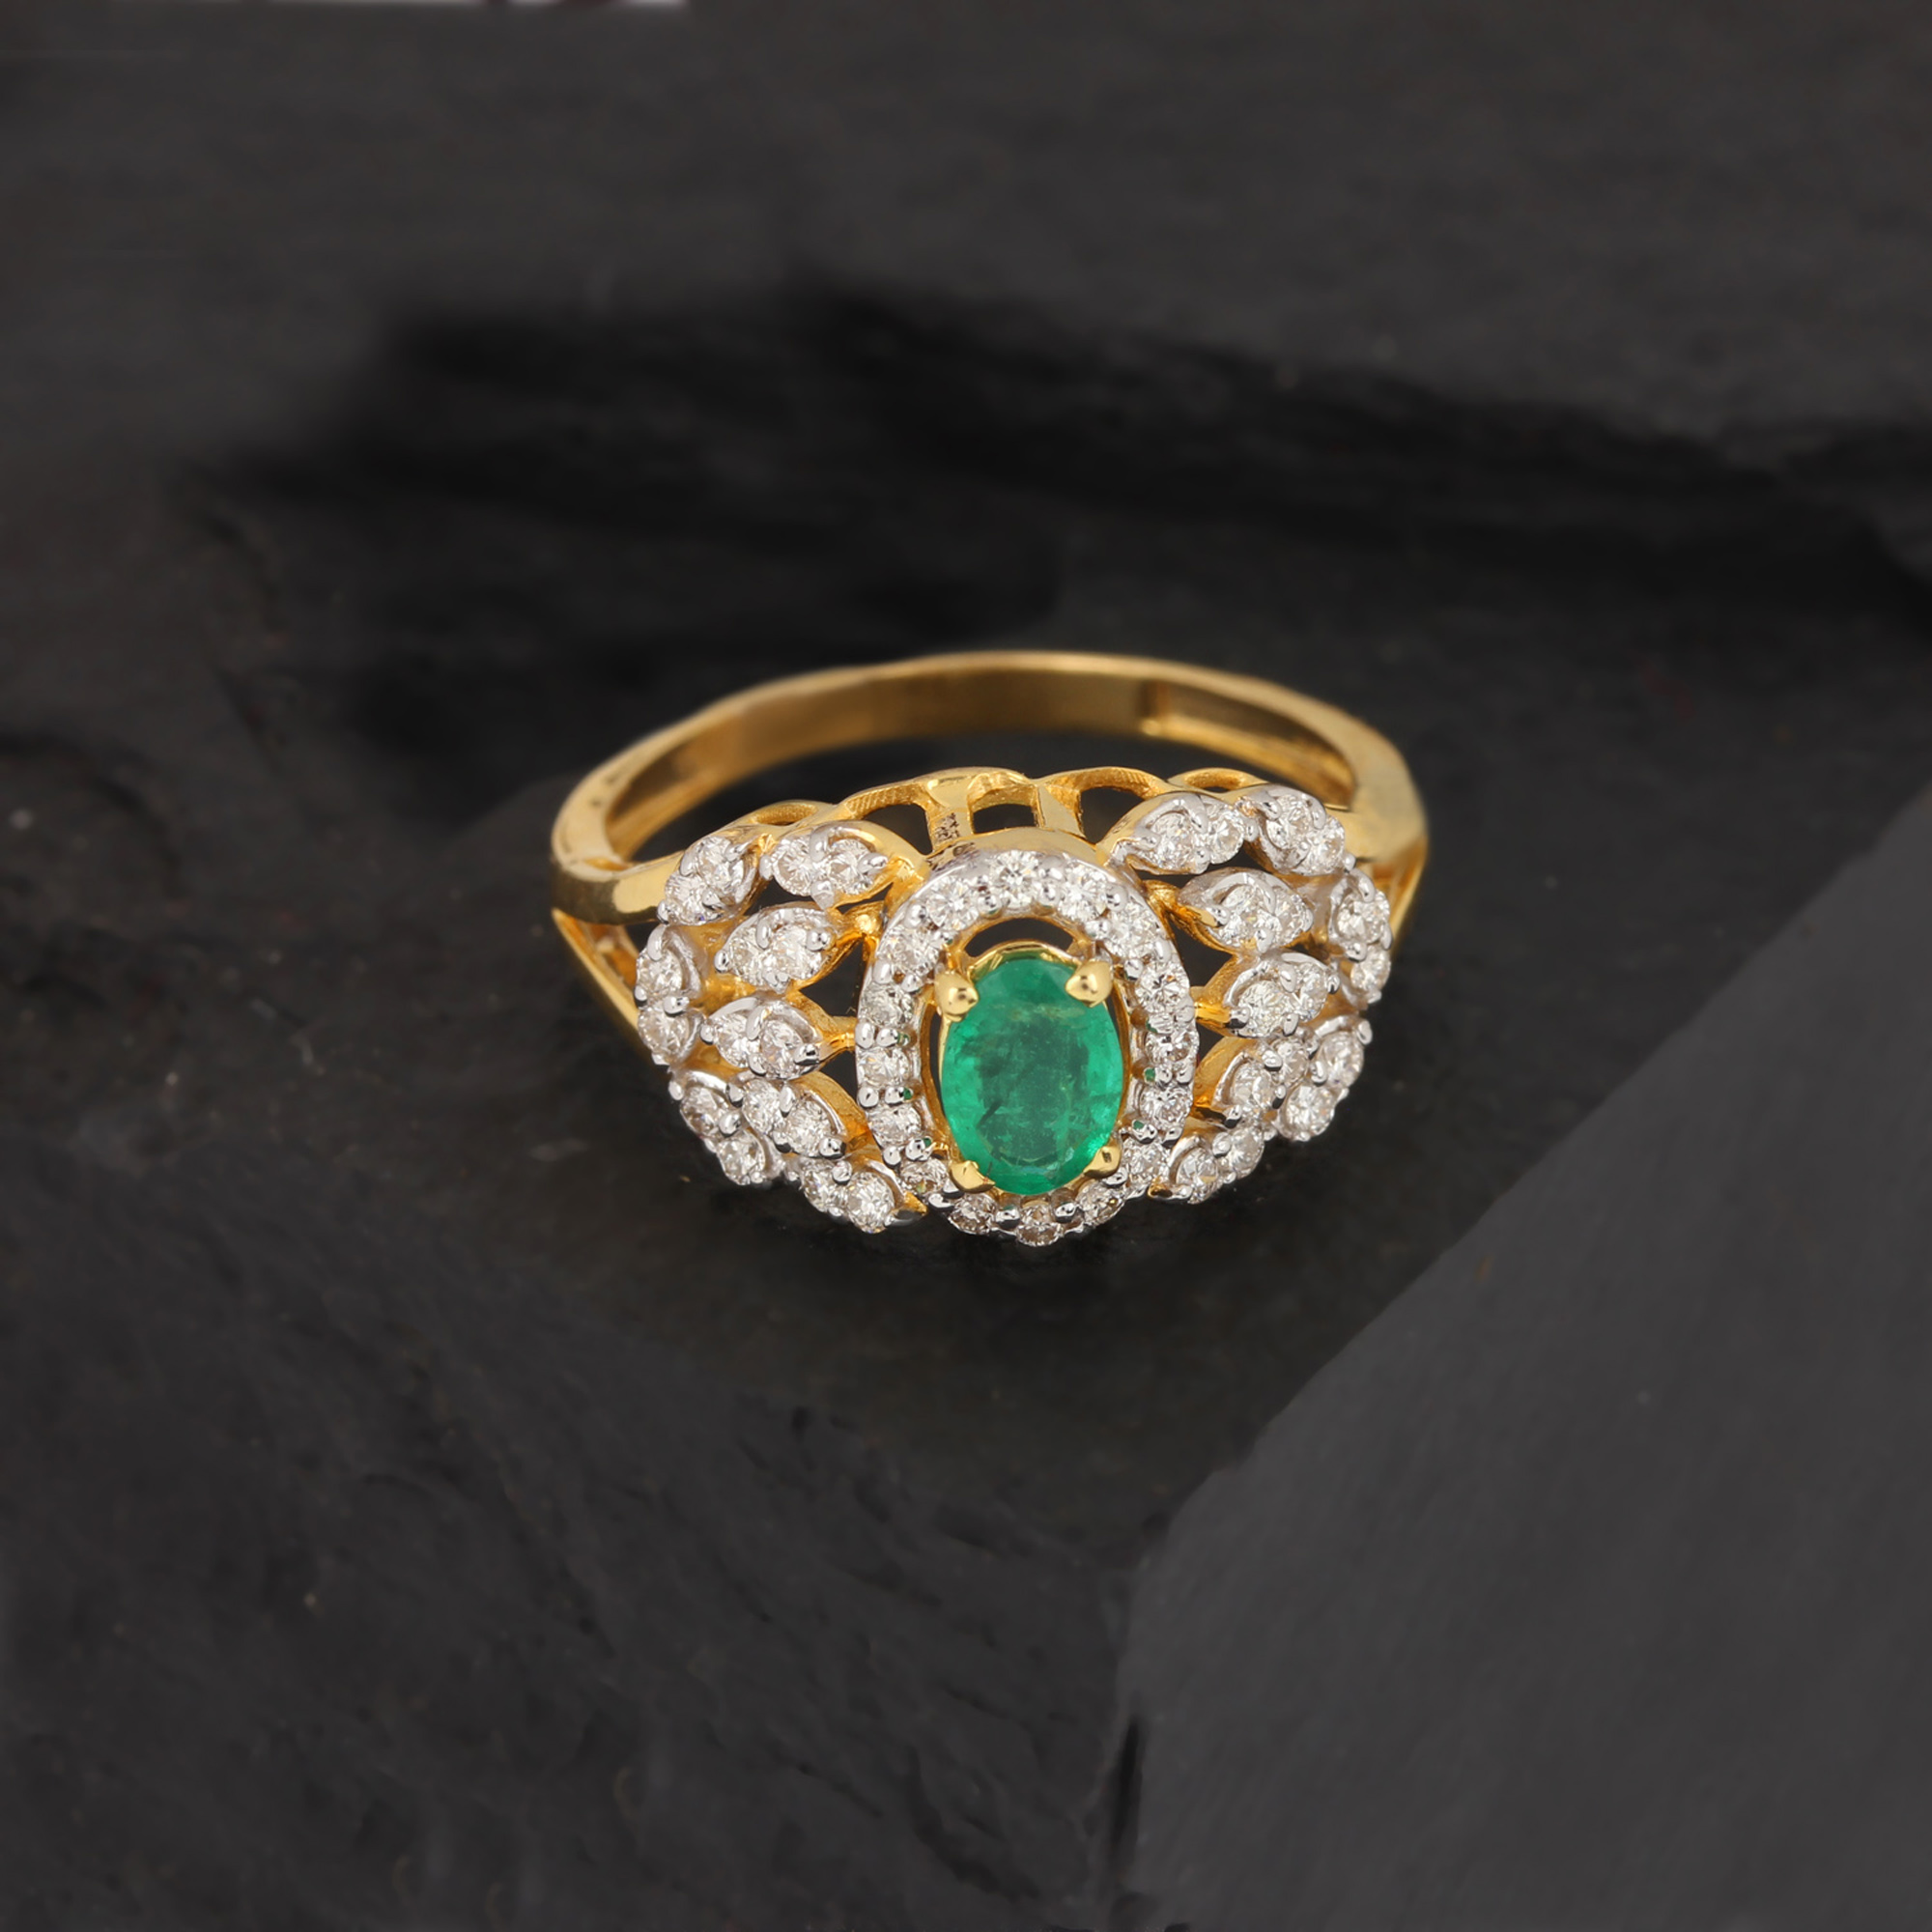 Gold beautiful ring with diamond & emerald